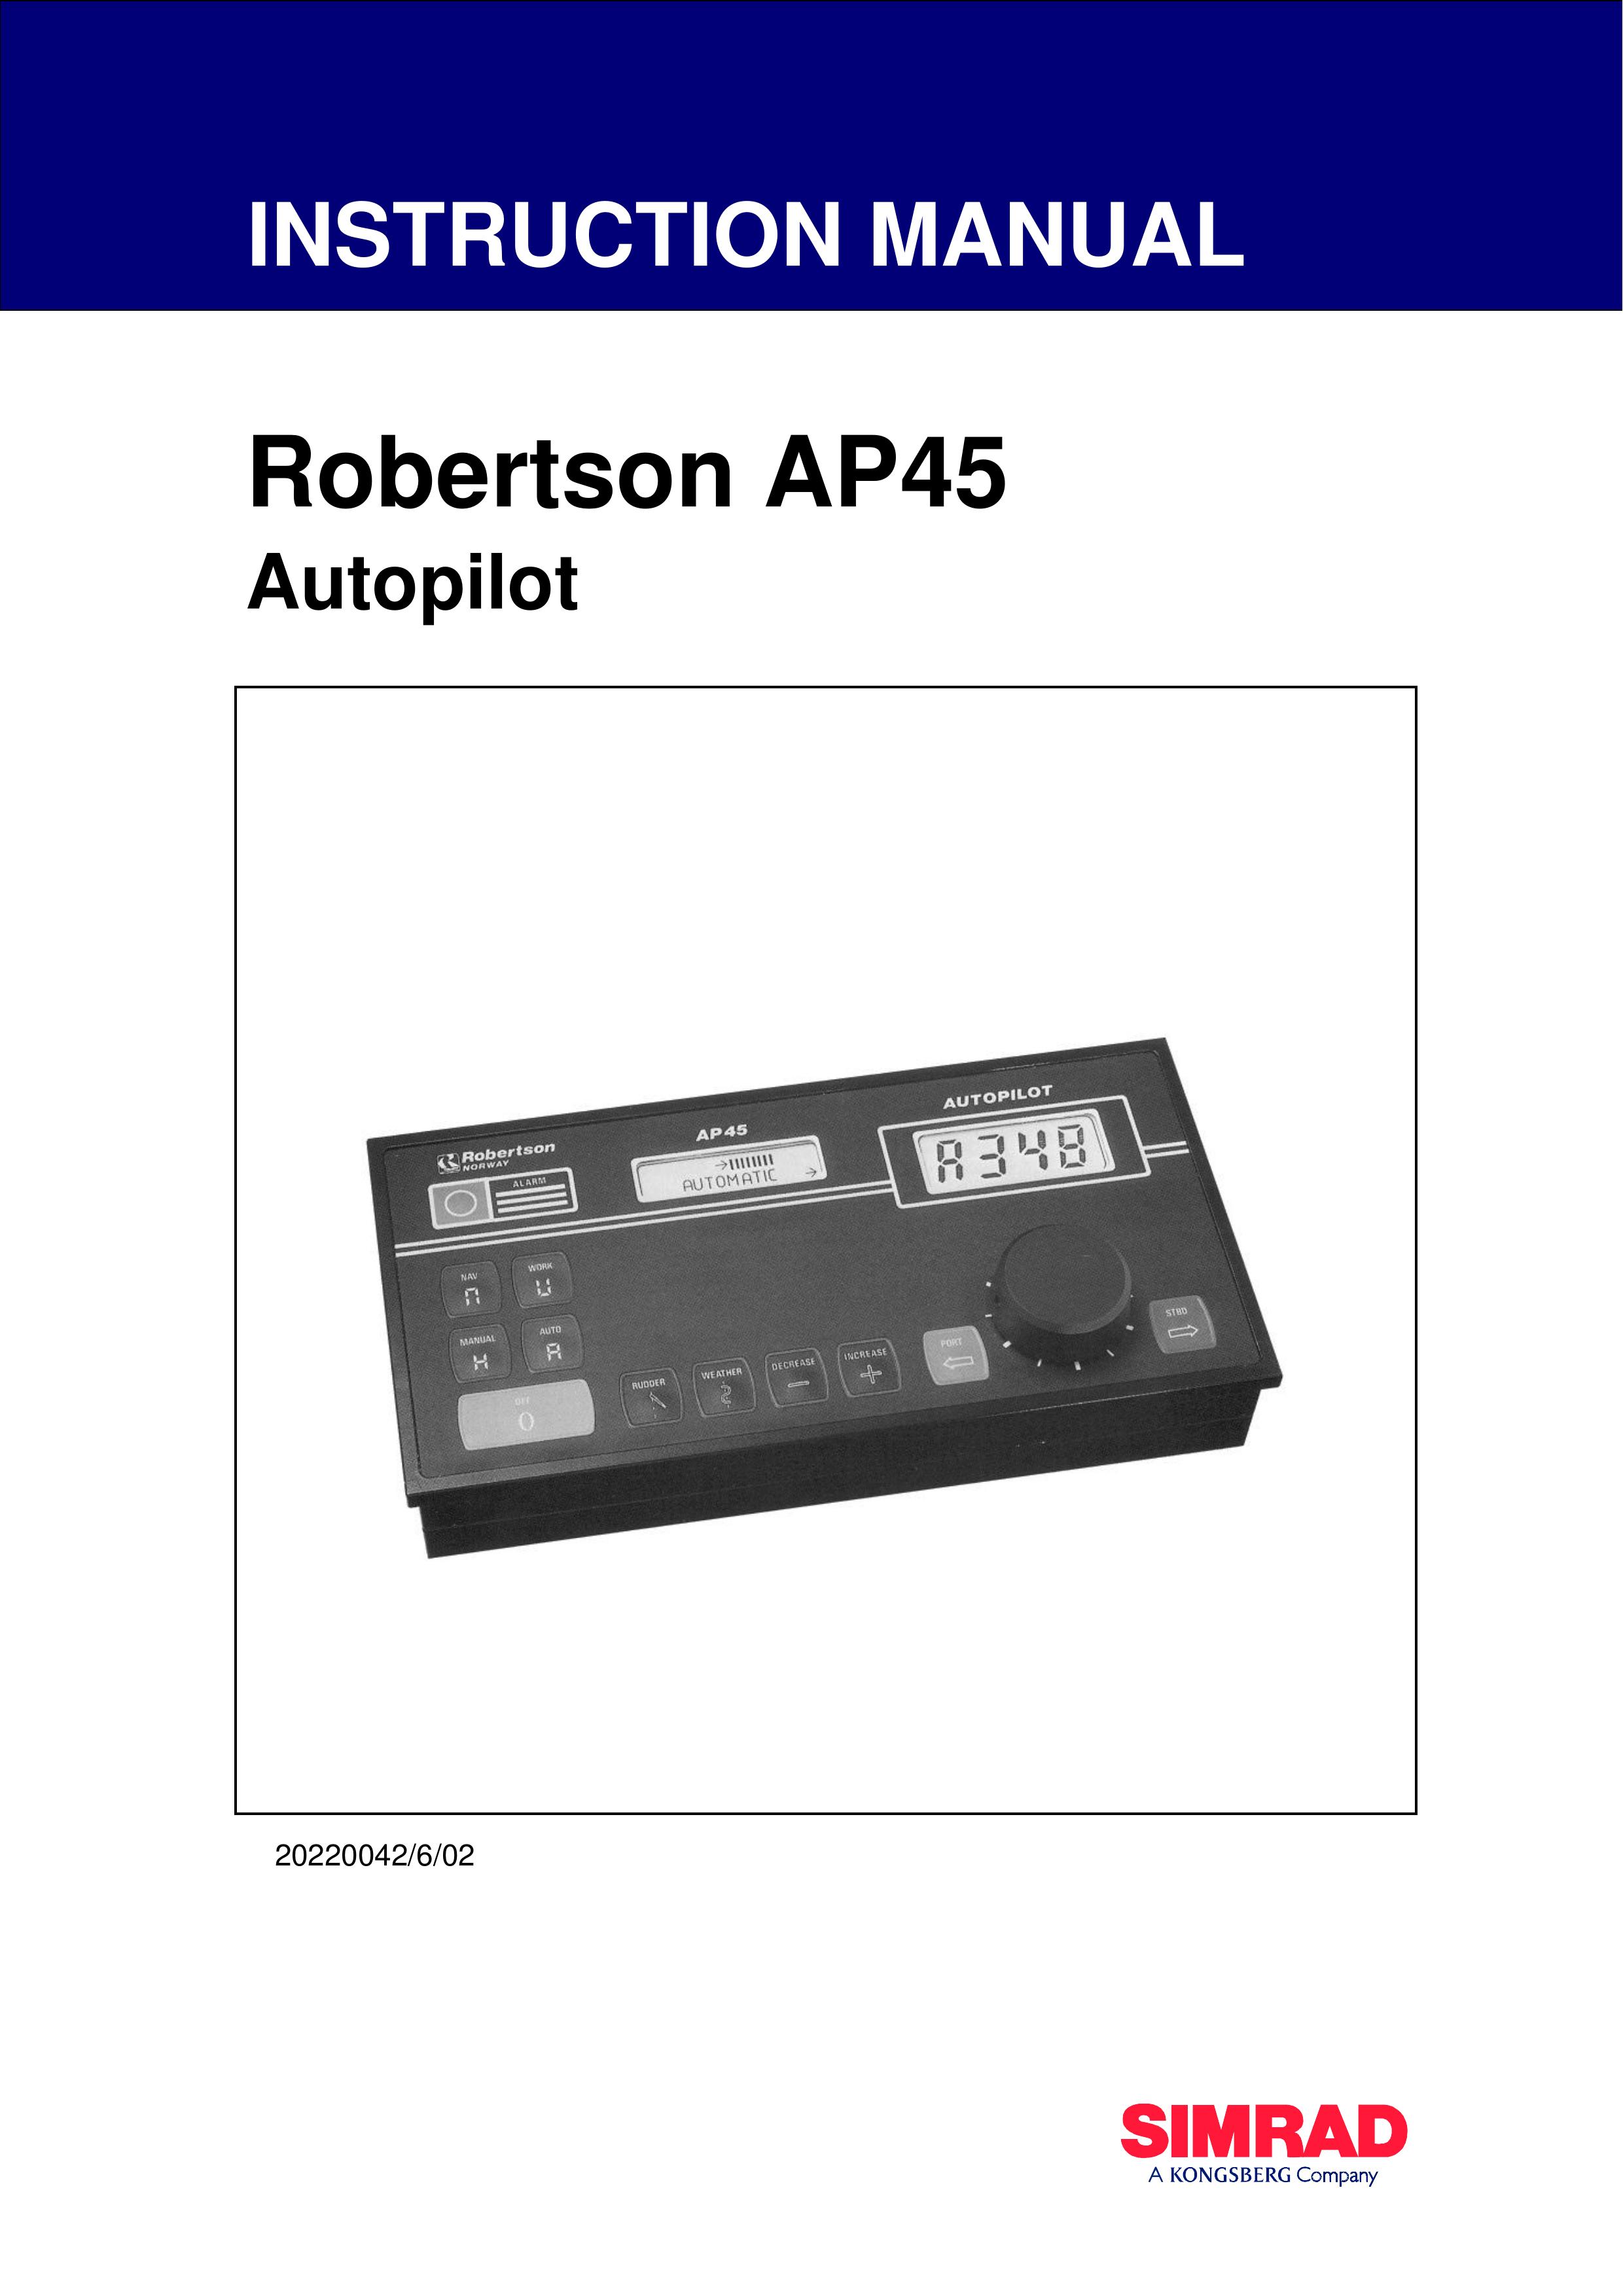 Simrad ROBERTSON AP45 Marine Instruments User Manual